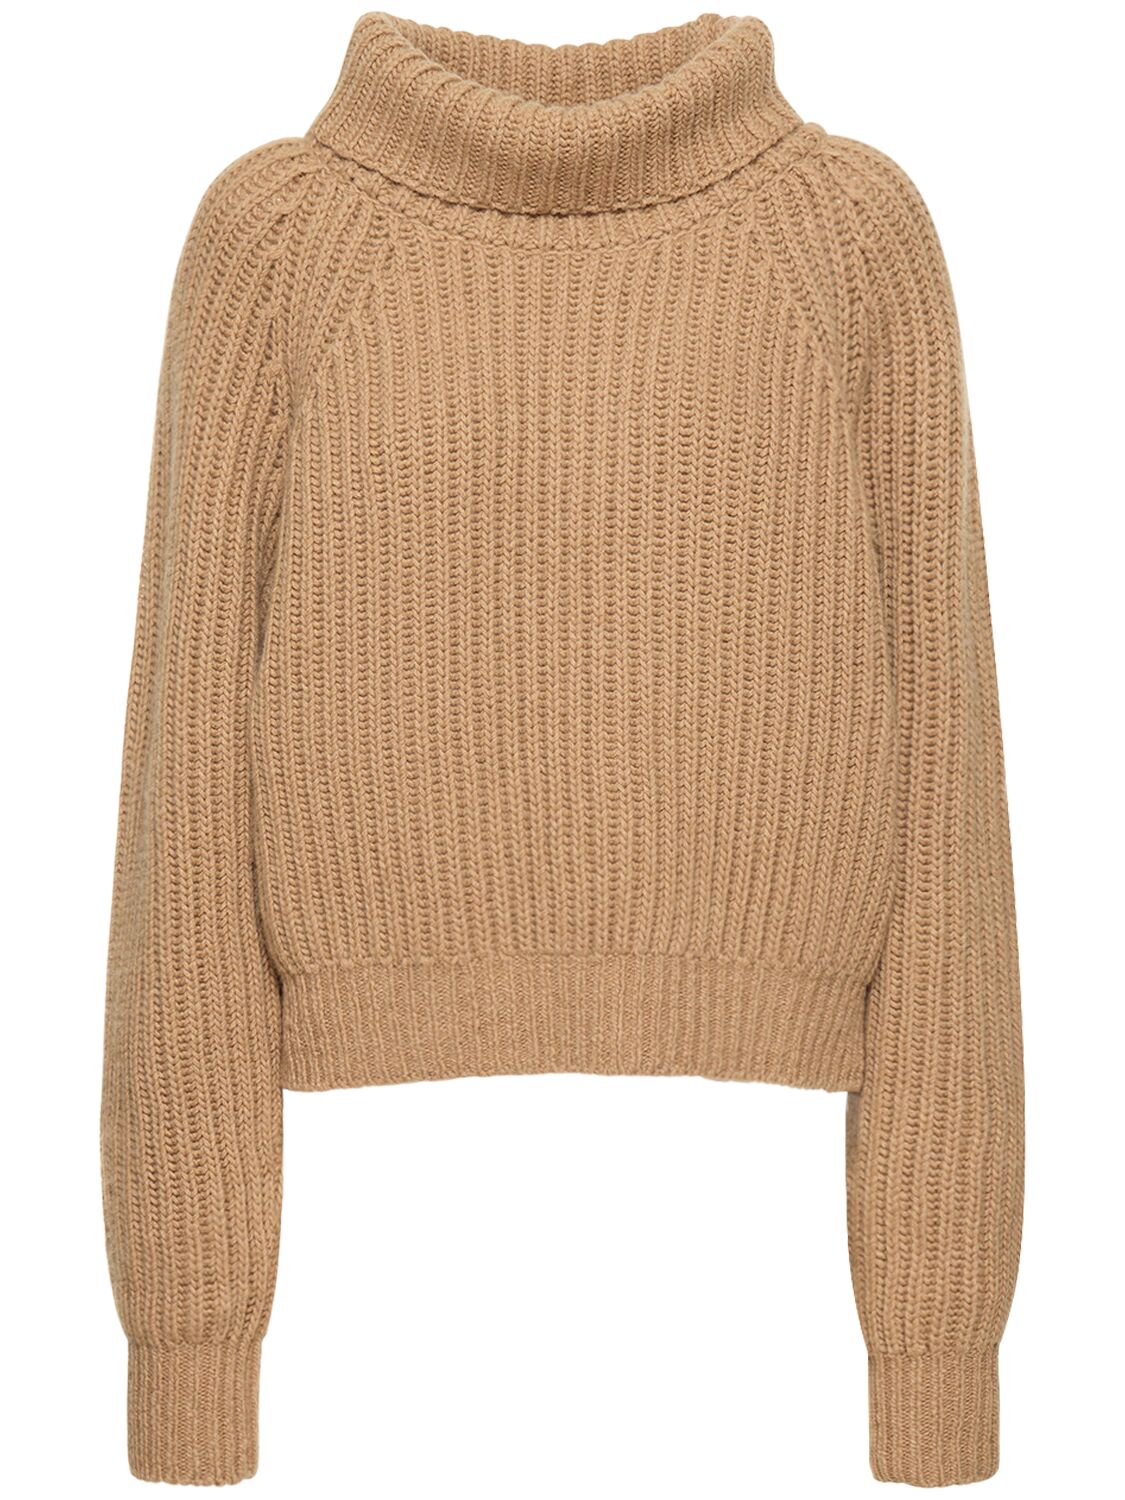 Lanzino Cashmere Turtleneck Sweater